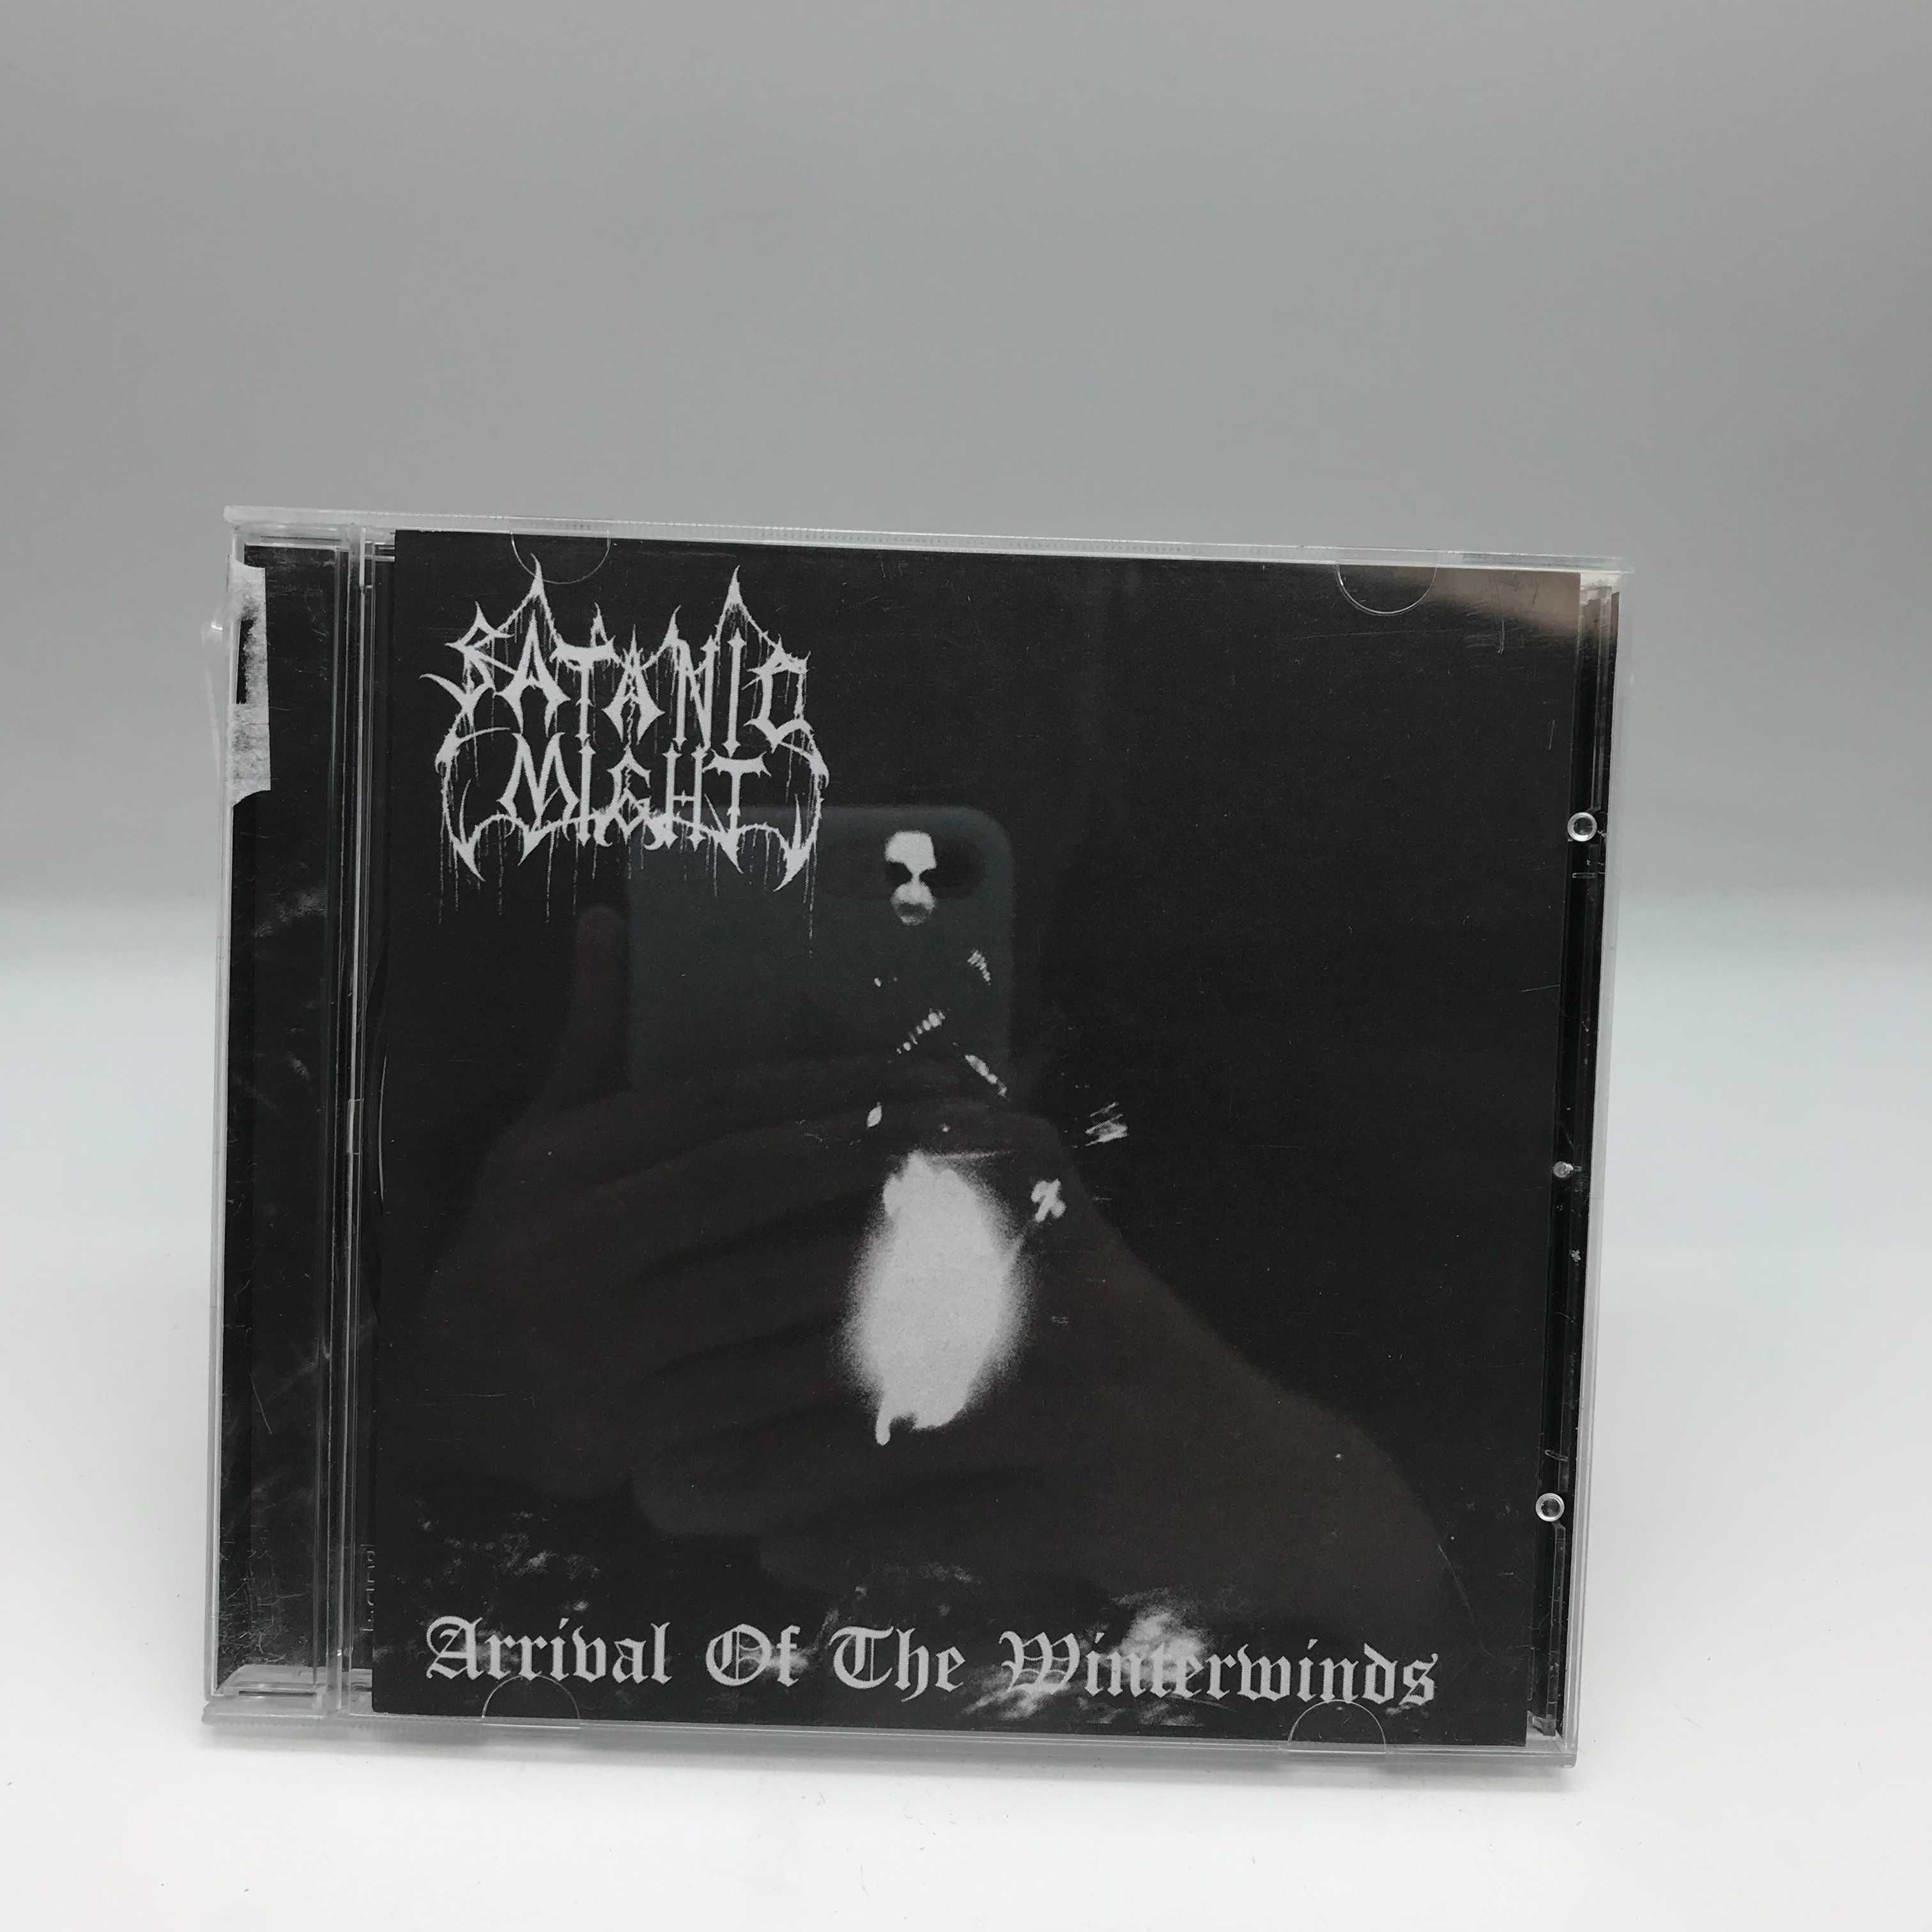 płyta CD Satanic Might - Arrival Of The Winterwinds